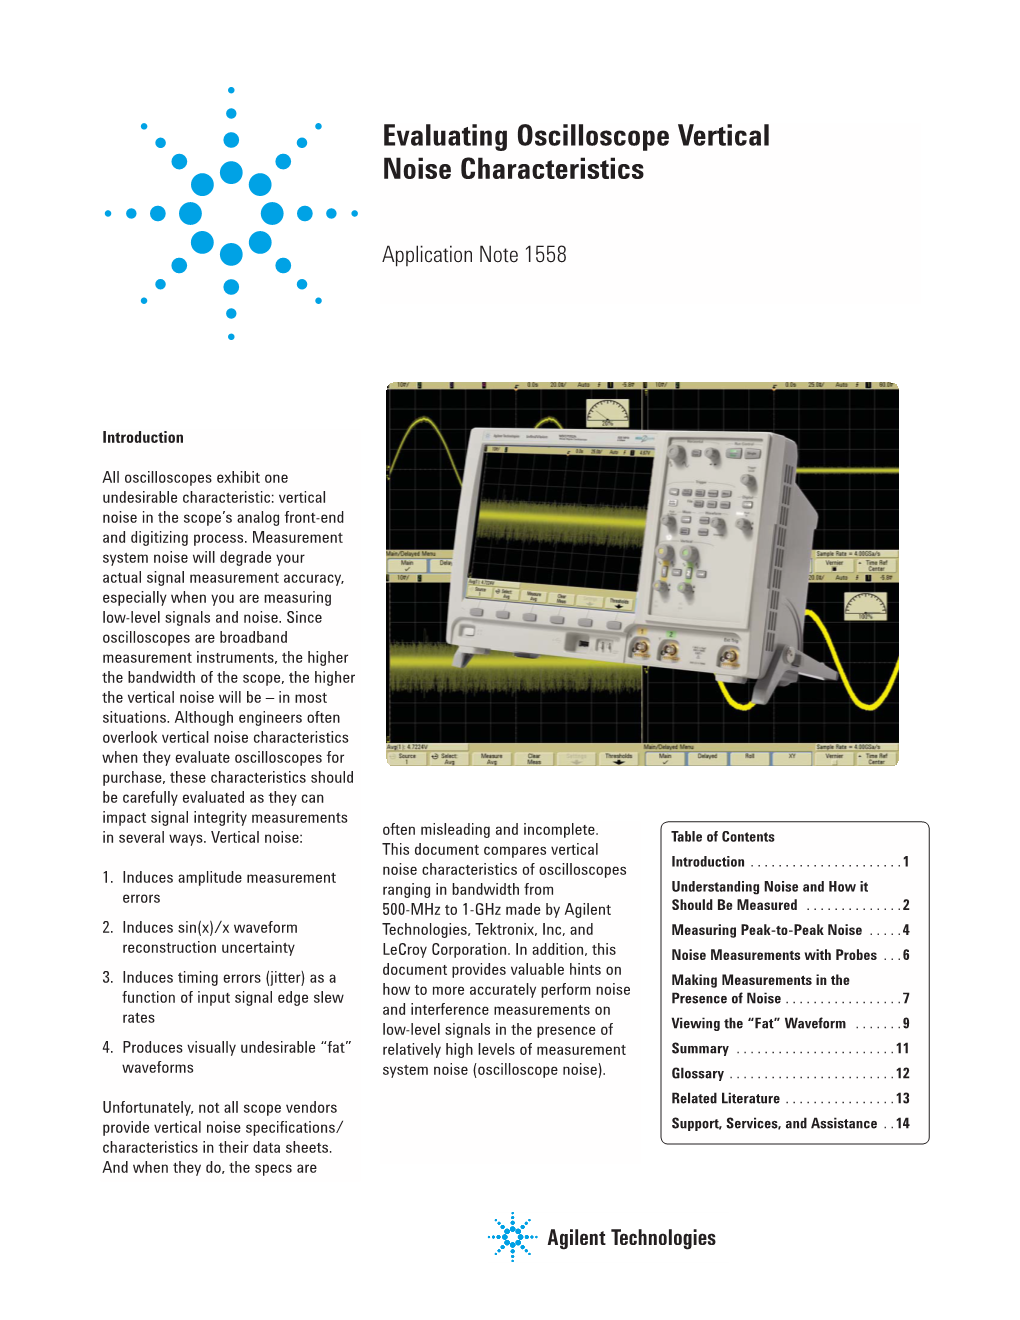 Evaluating Oscilloscope Vertical Noise Characteristics